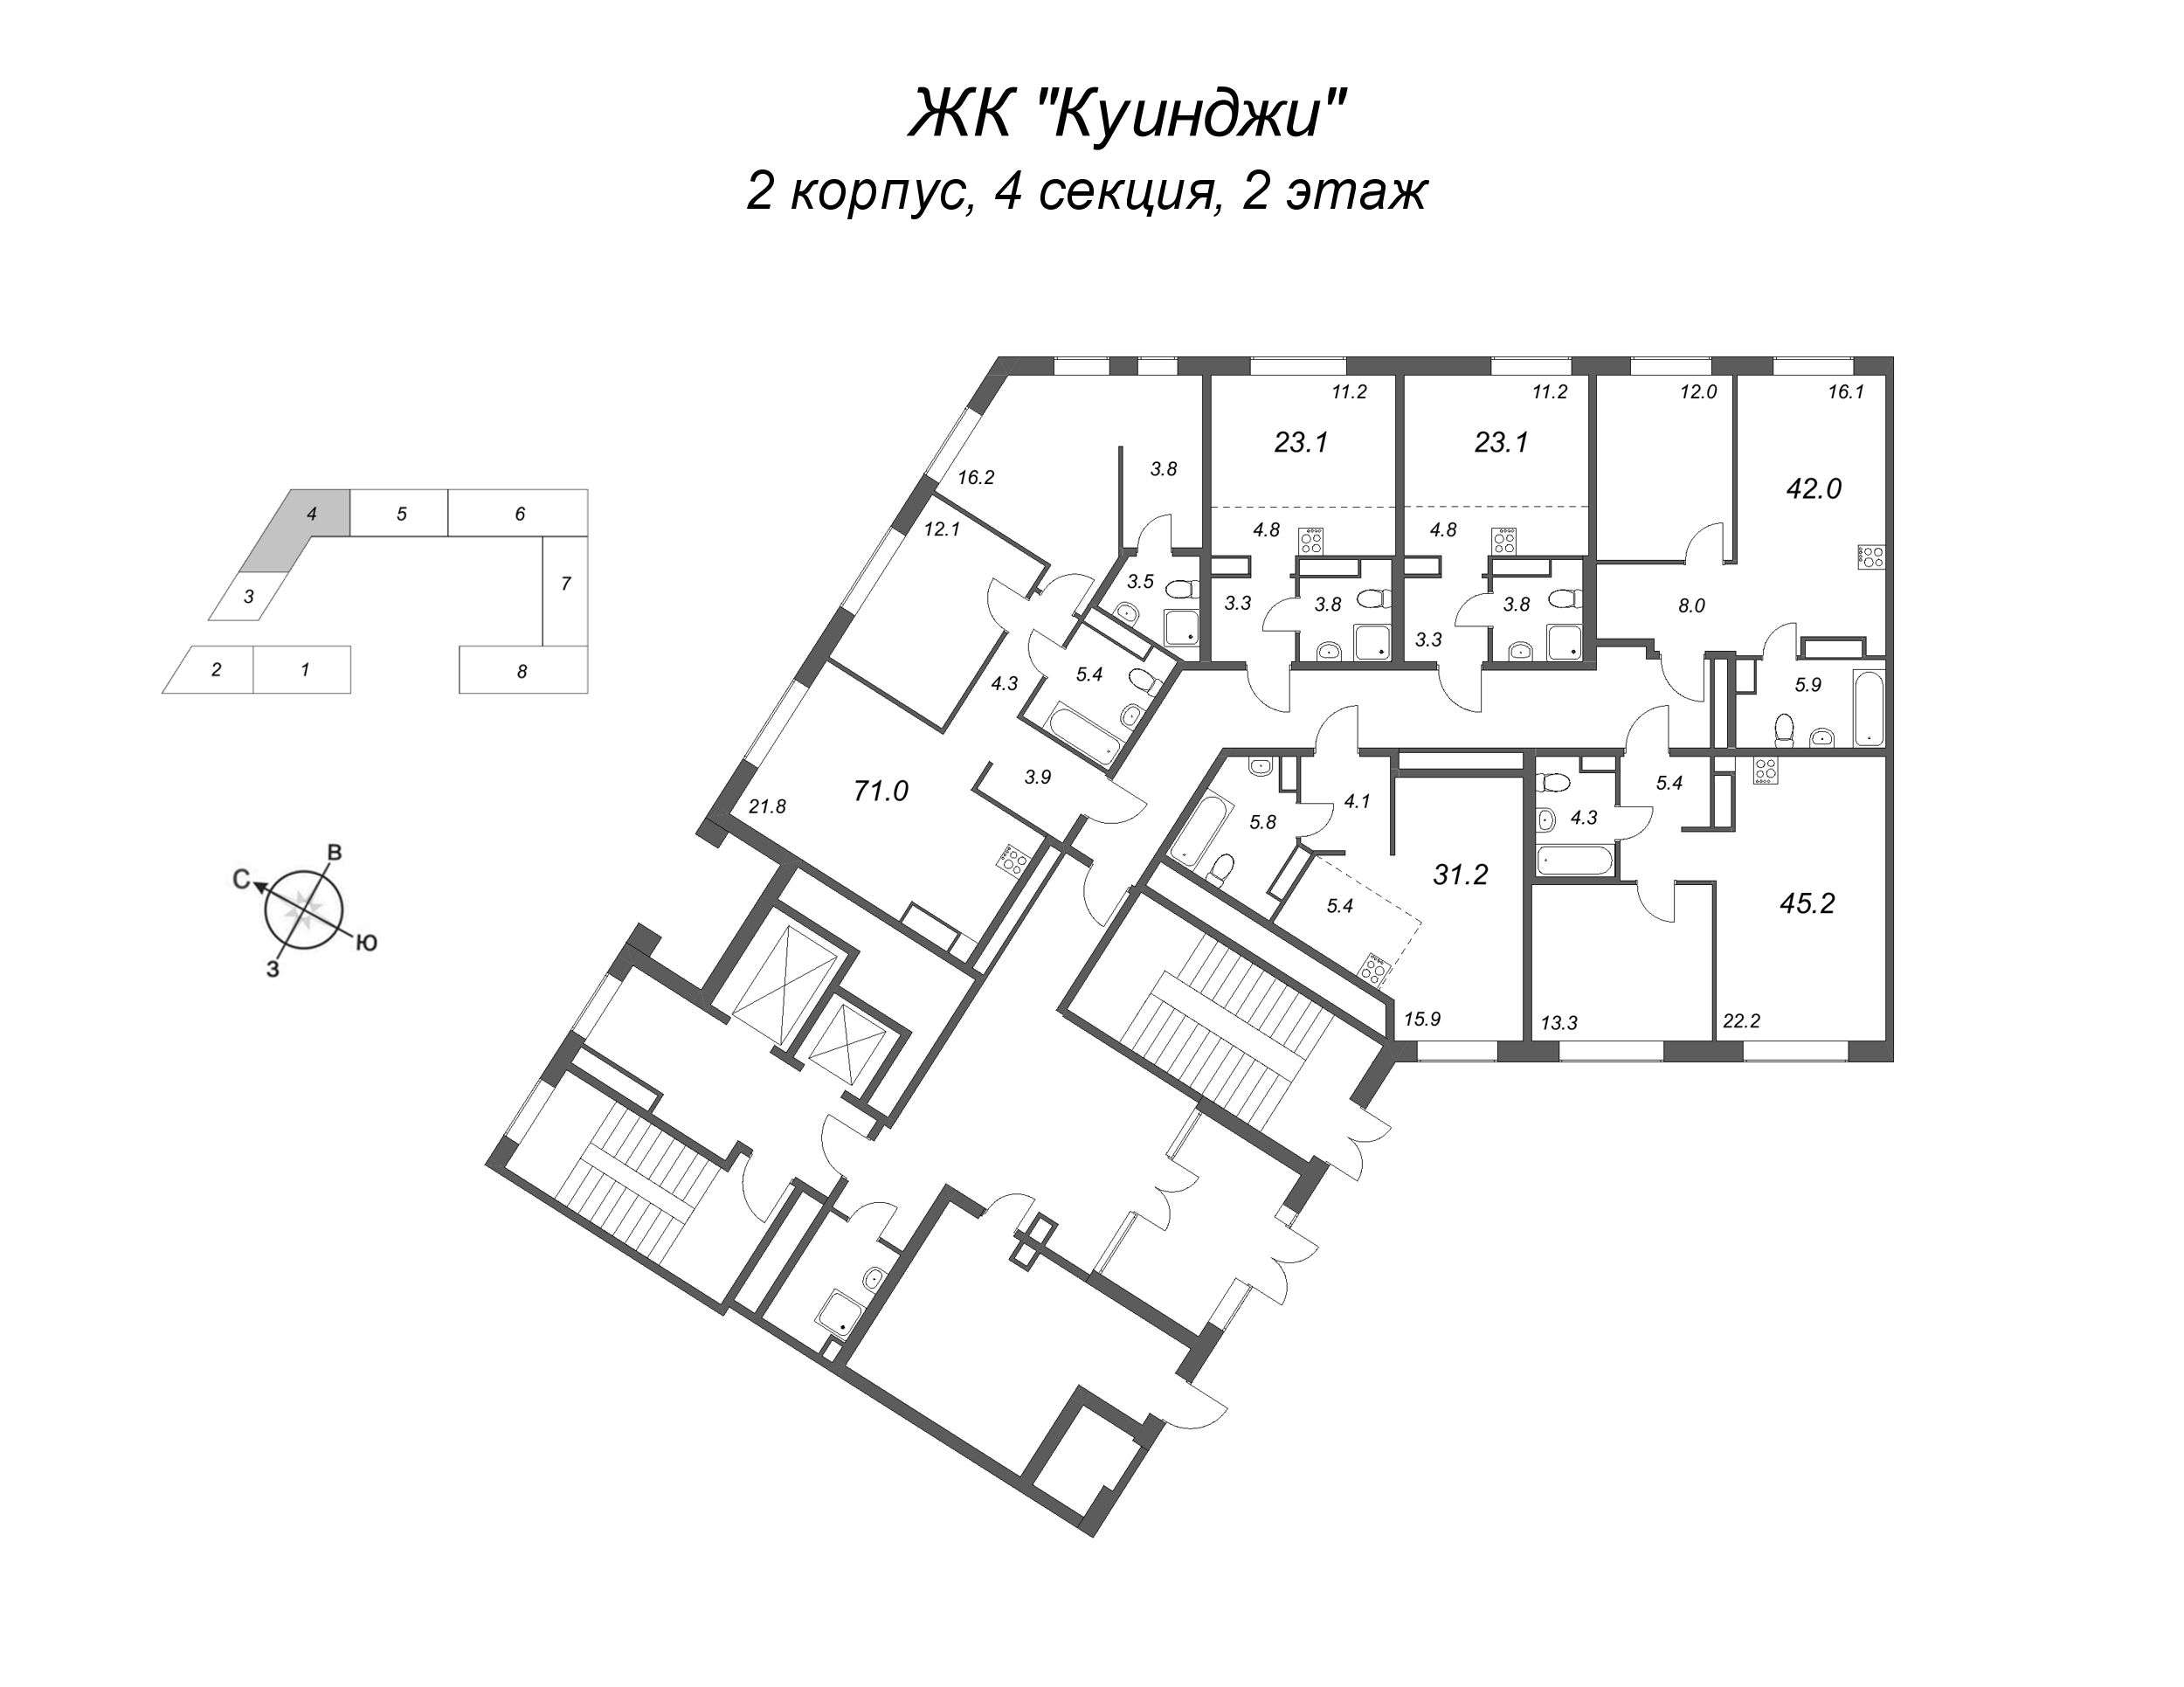 2-комнатная (Евро) квартира, 45.2 м² - планировка этажа